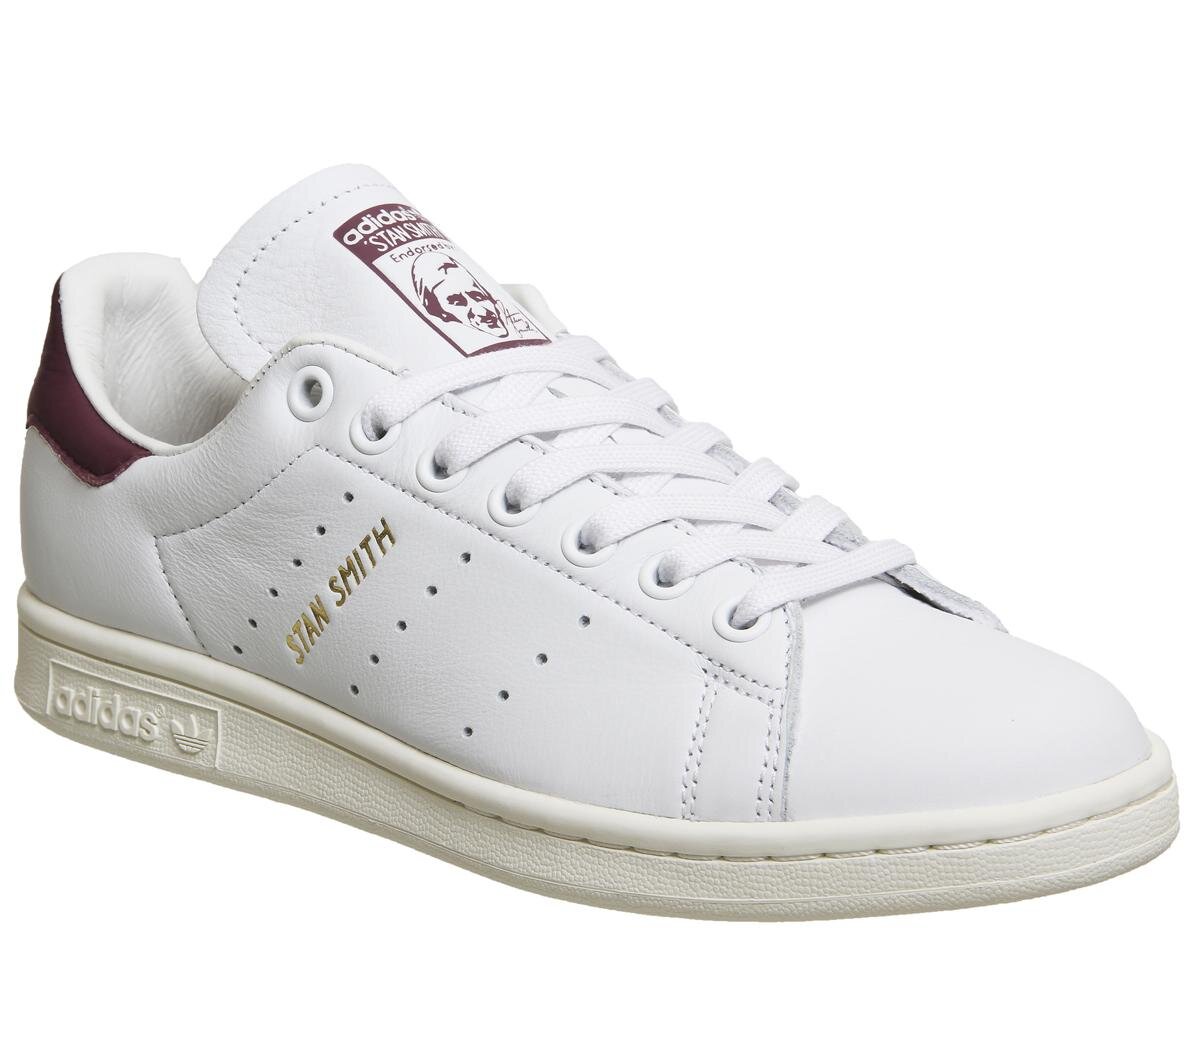 Adidas Stan Smith Shoes in White:Collegiate Burgundy.jpg